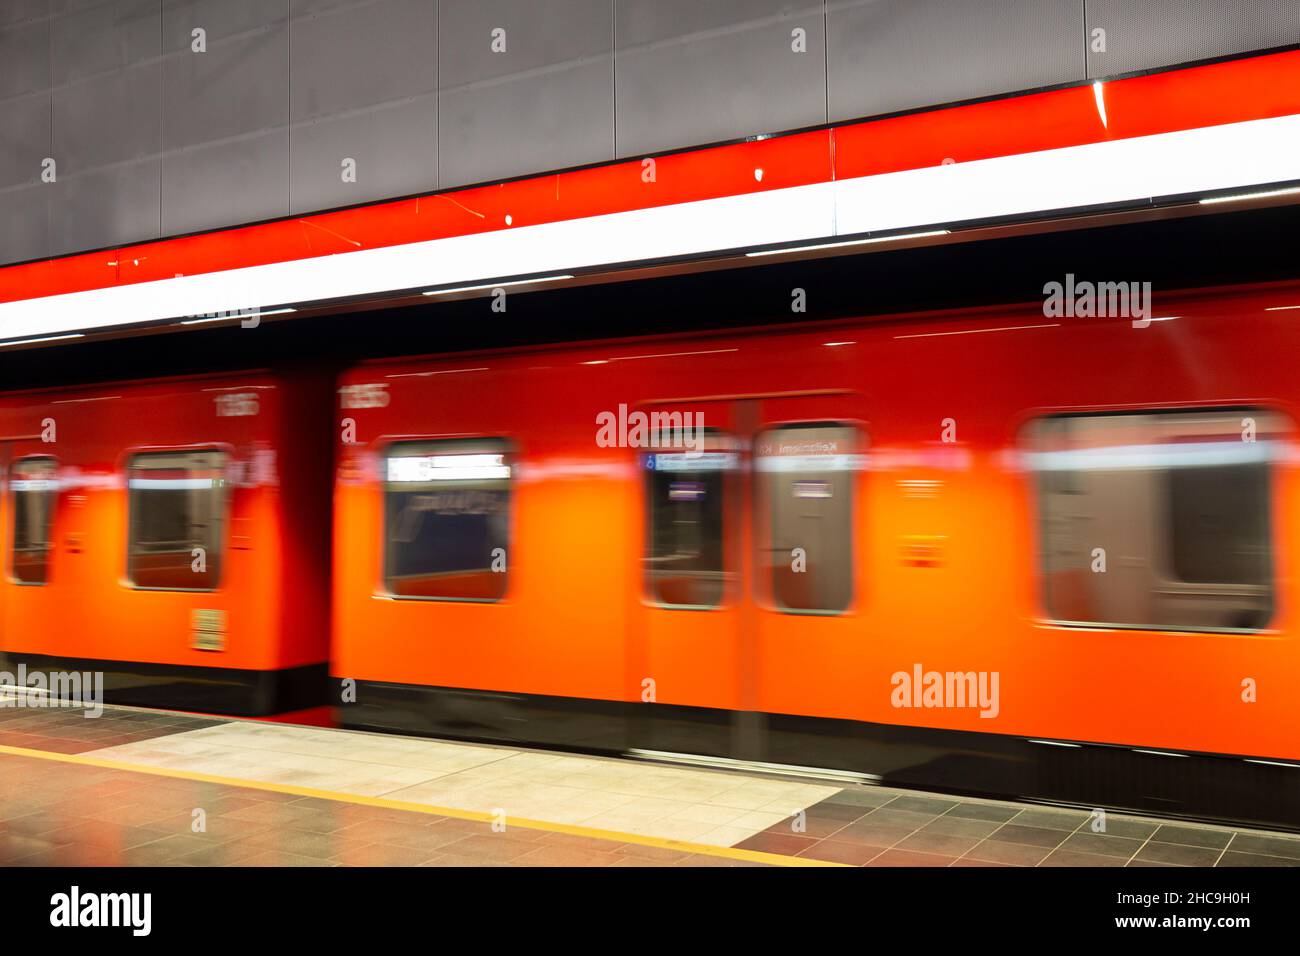 Orange subway train in motion at an underground station in Helsinki, Finland. Stock Photo